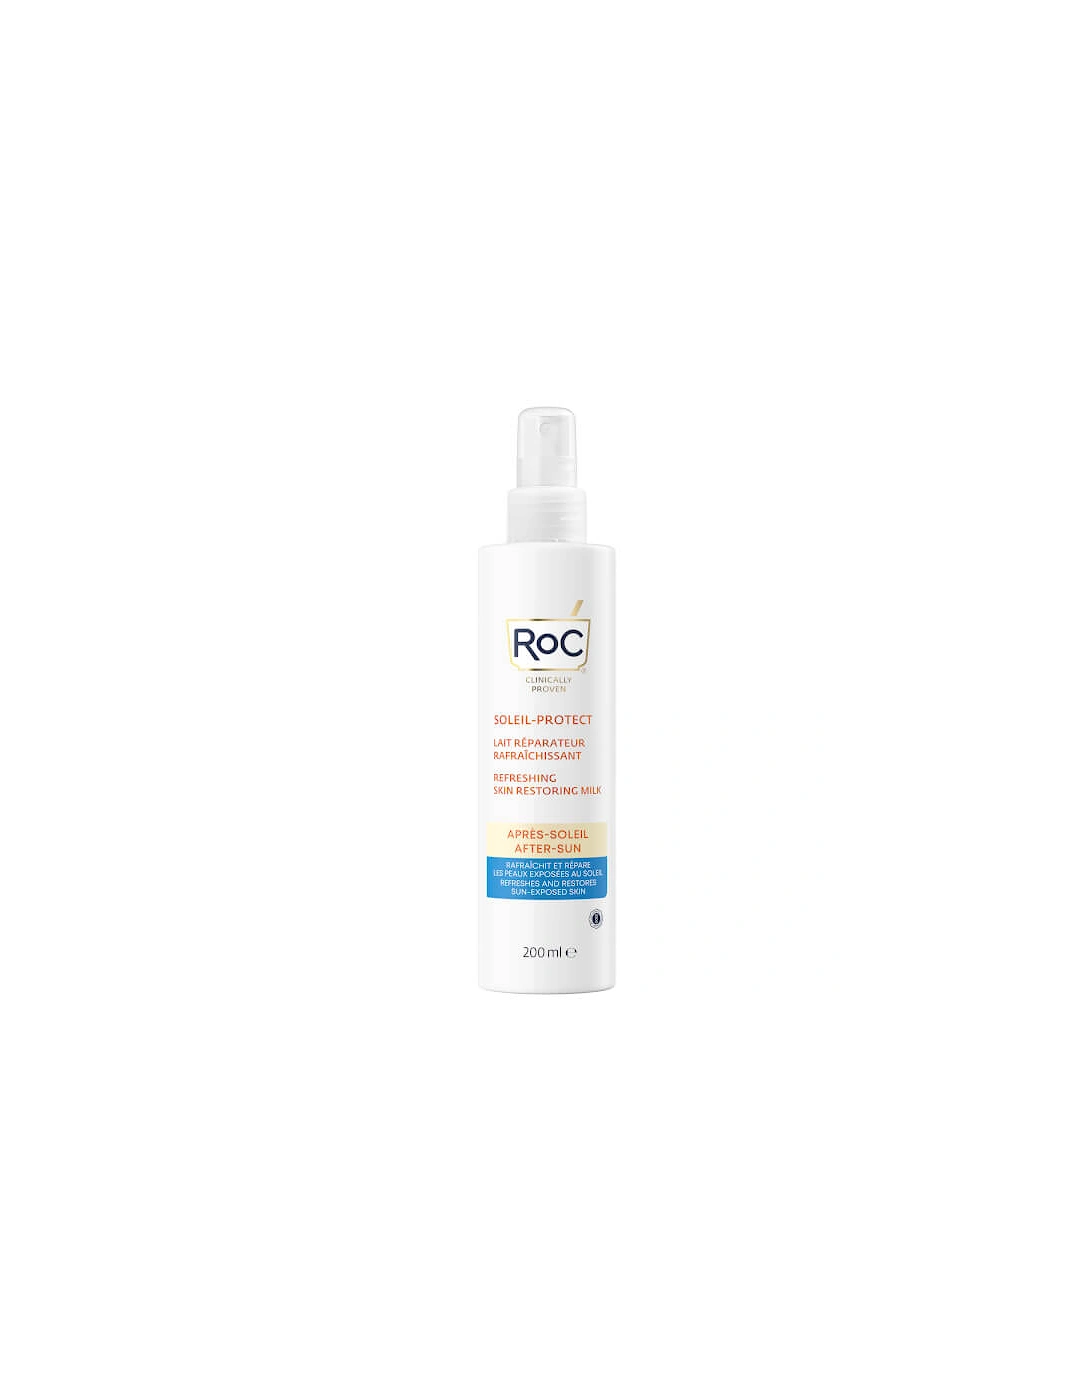 RoC Soleil-Protect Refreshing Skin Restoring Milk After-Sun 200ml, 2 of 1